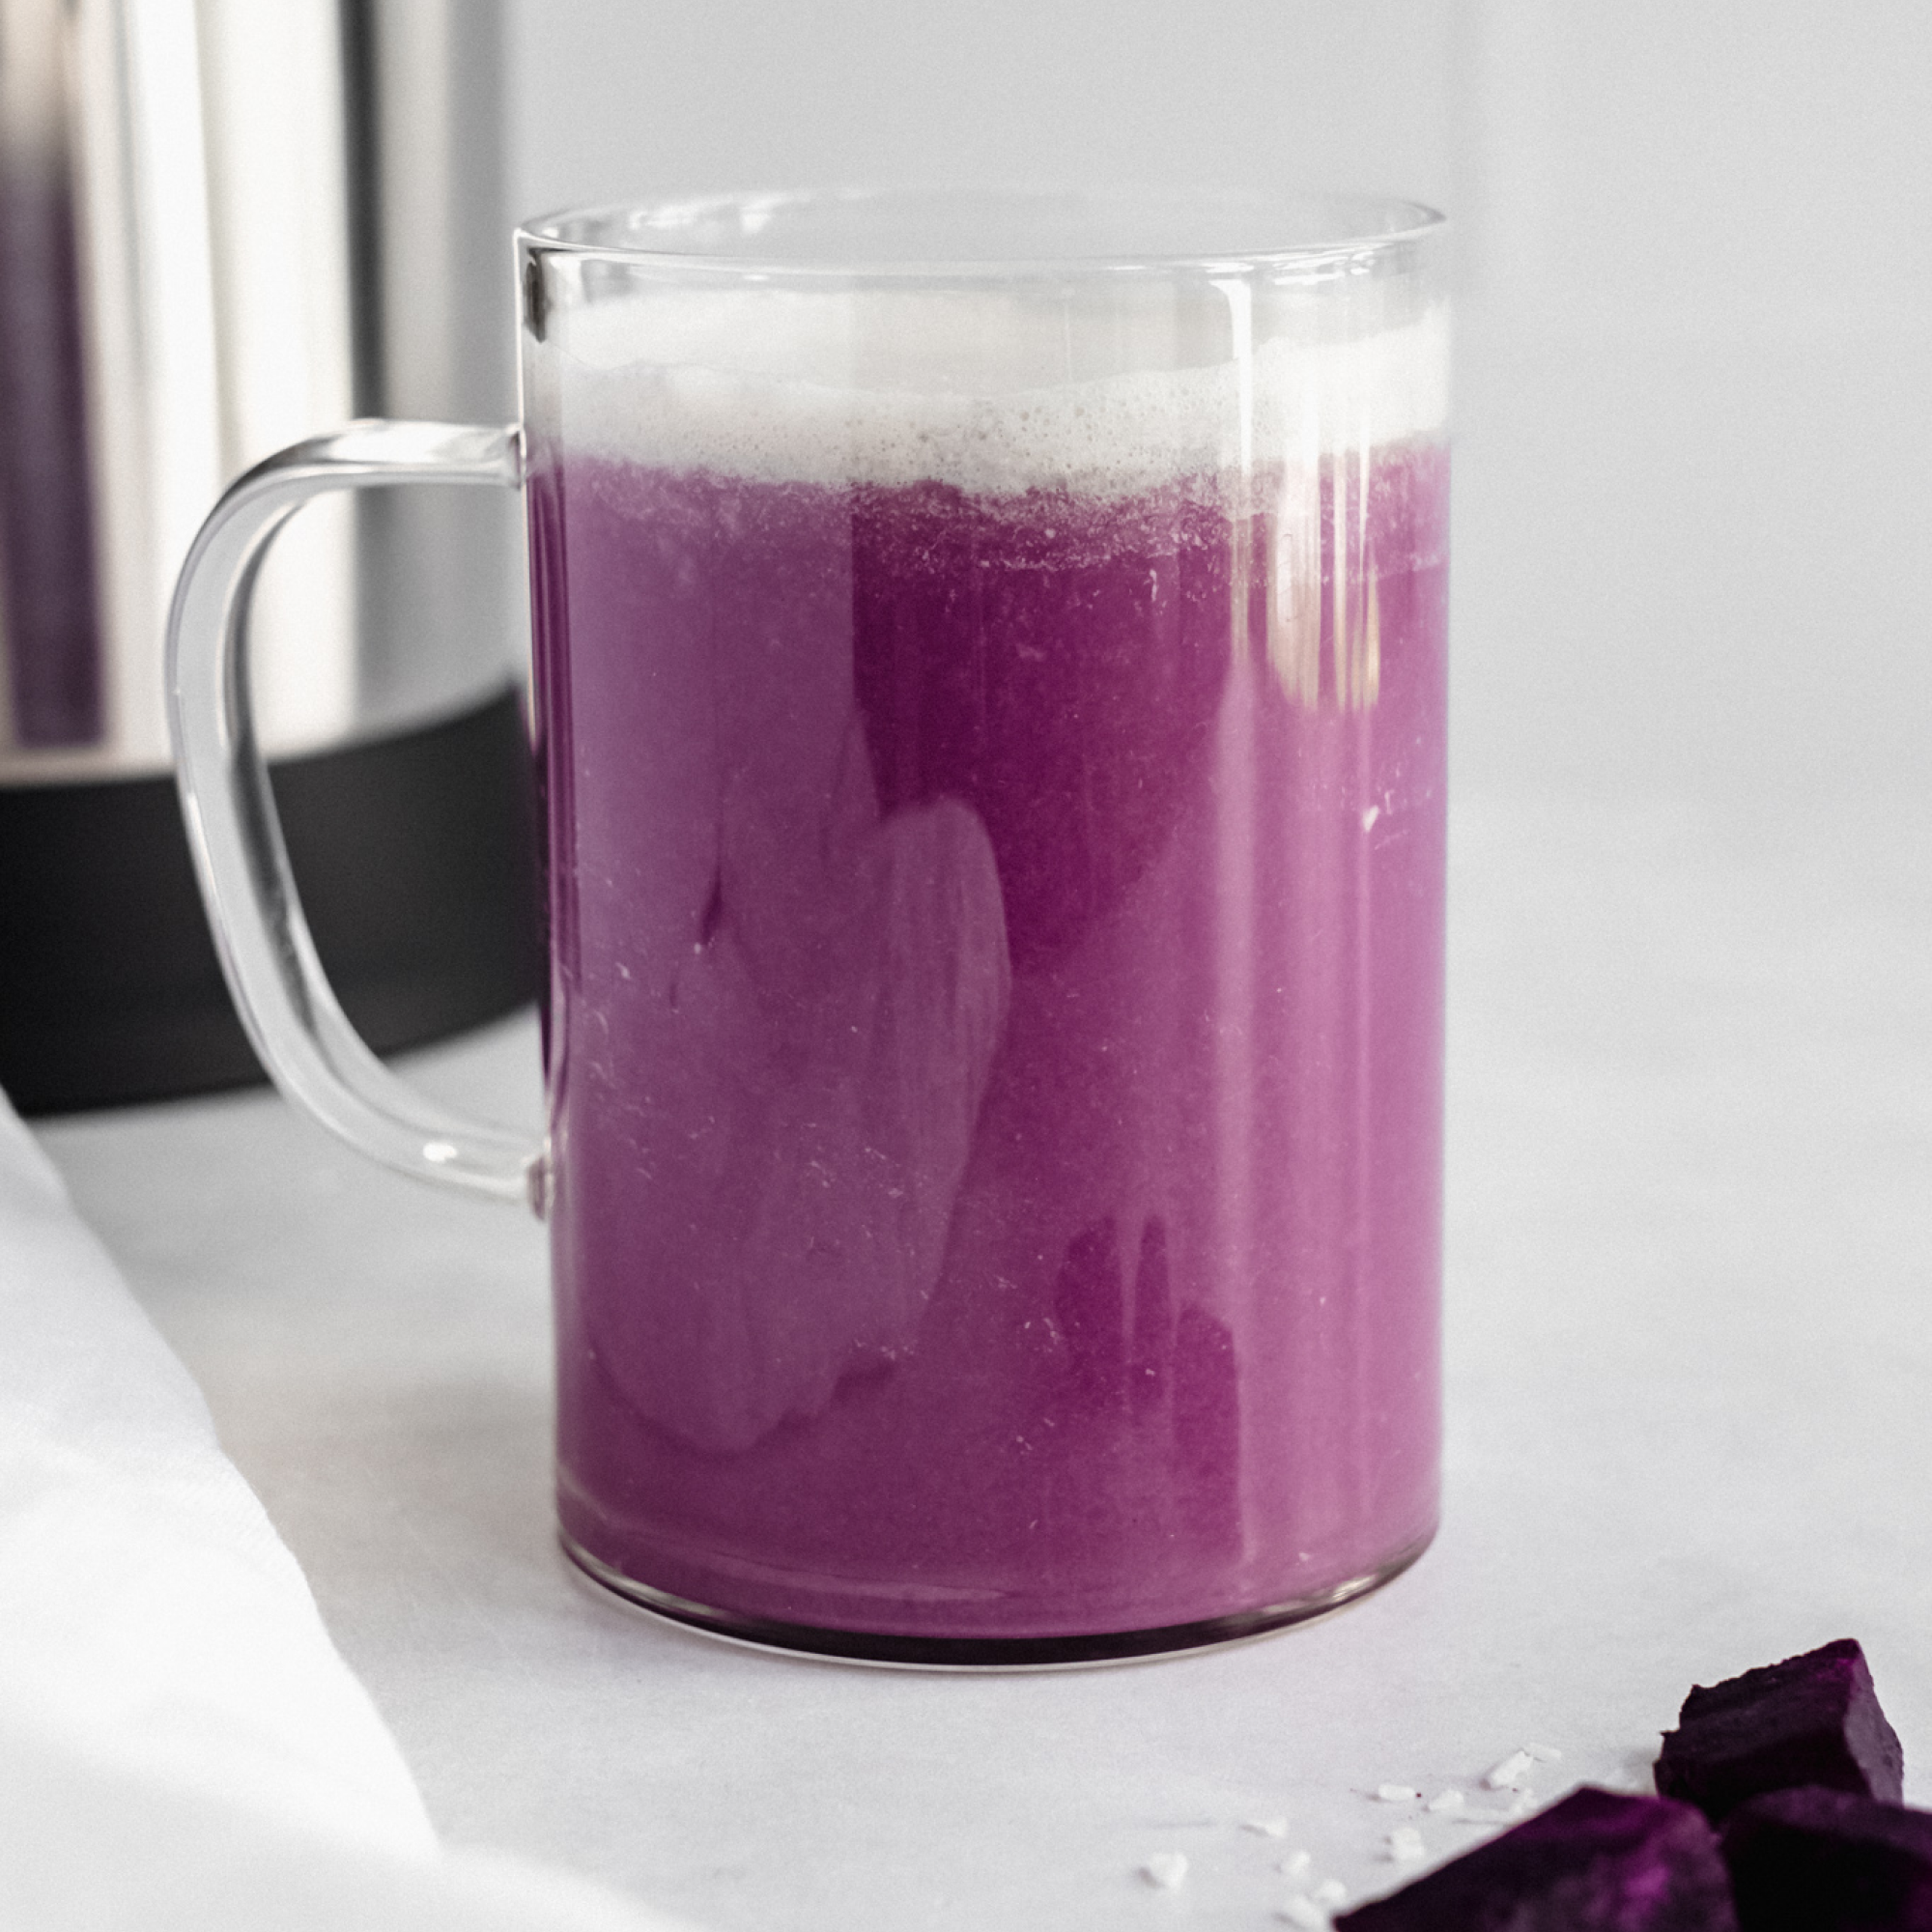 Creamy and slightly savory Purple Sweet Potato Latte by Almond Cow